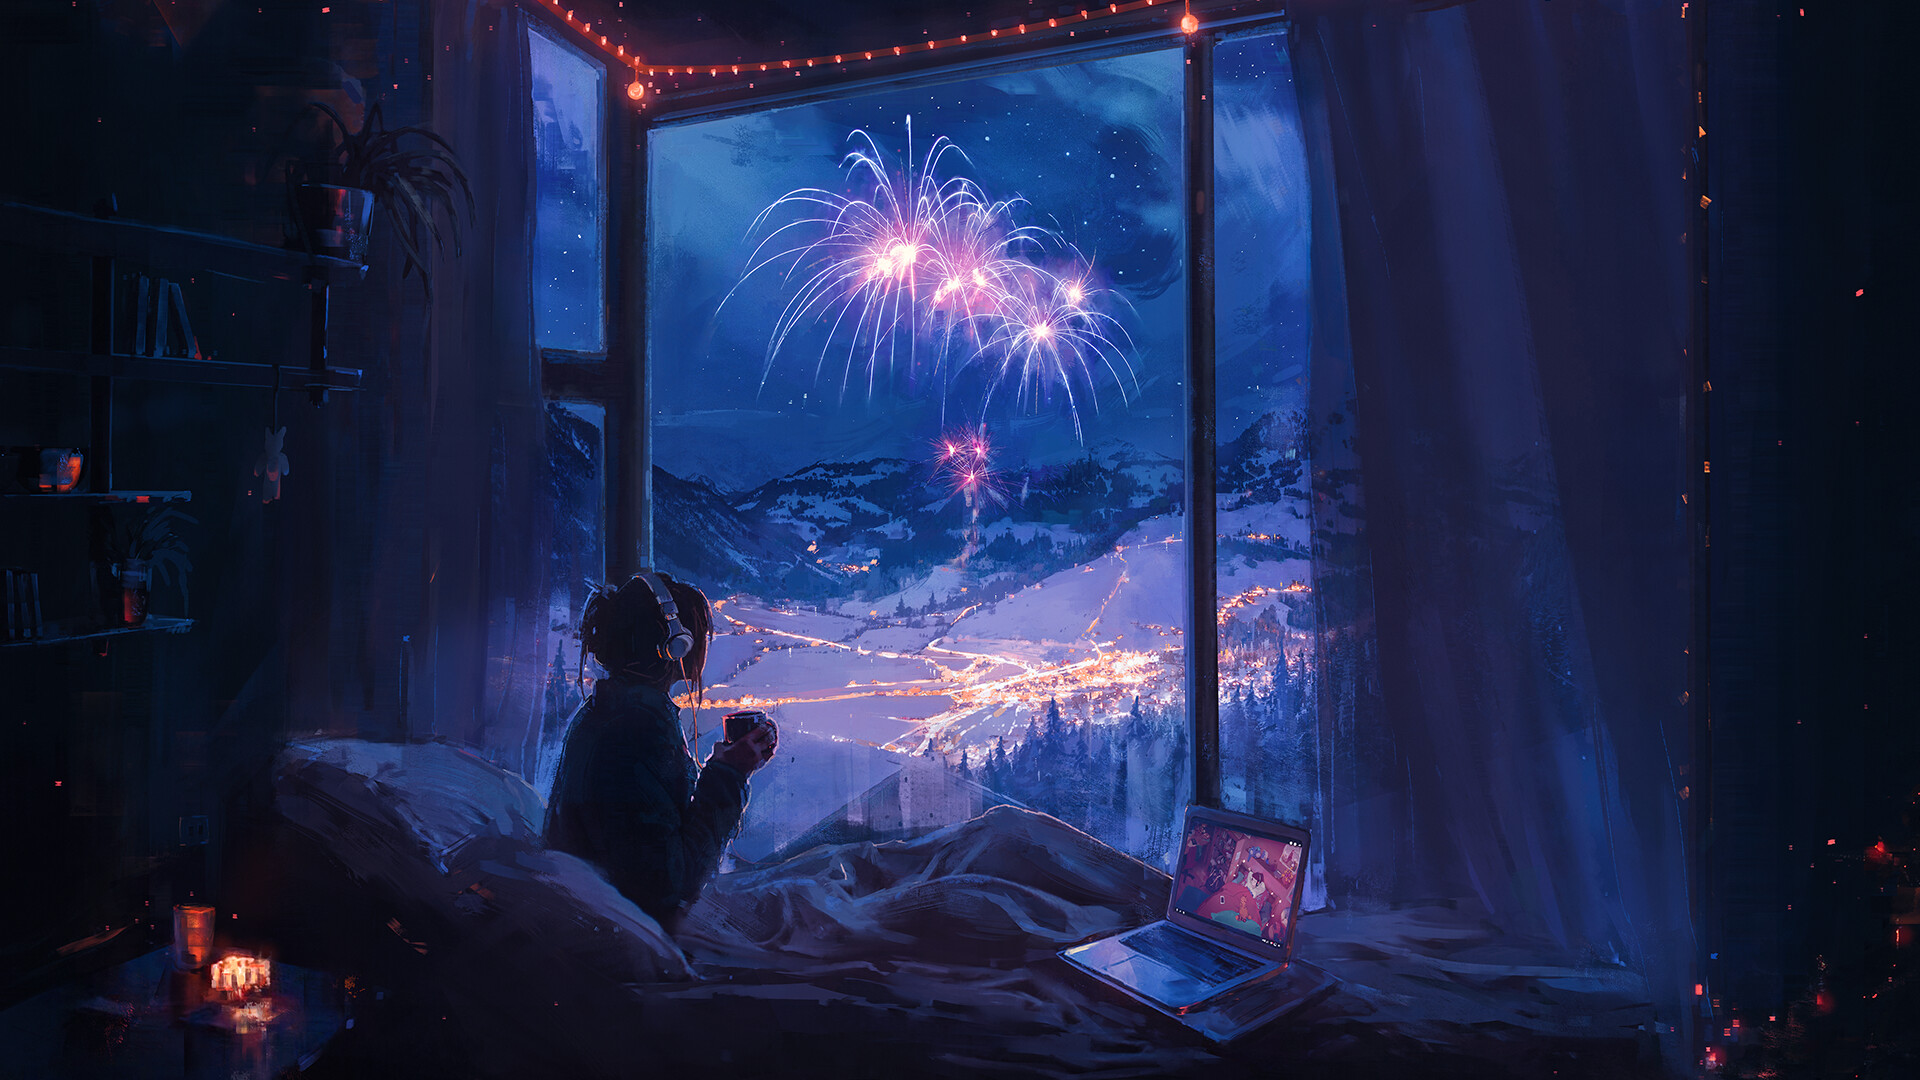 Aenami Artwork Digital Art Fireworks LofiGirl Laptop Window Bed Headphones In Bed Sky Mountains Cup  1920x1080